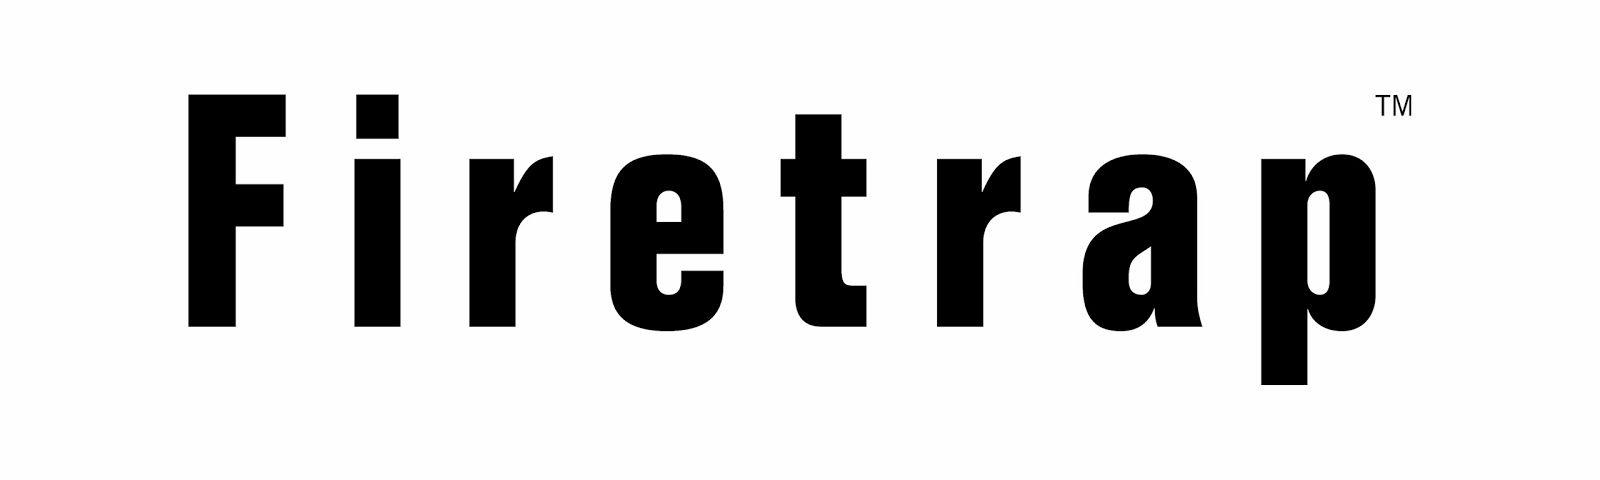 Firetrap Logo - men's styling: FIRETRAP COMPETITION